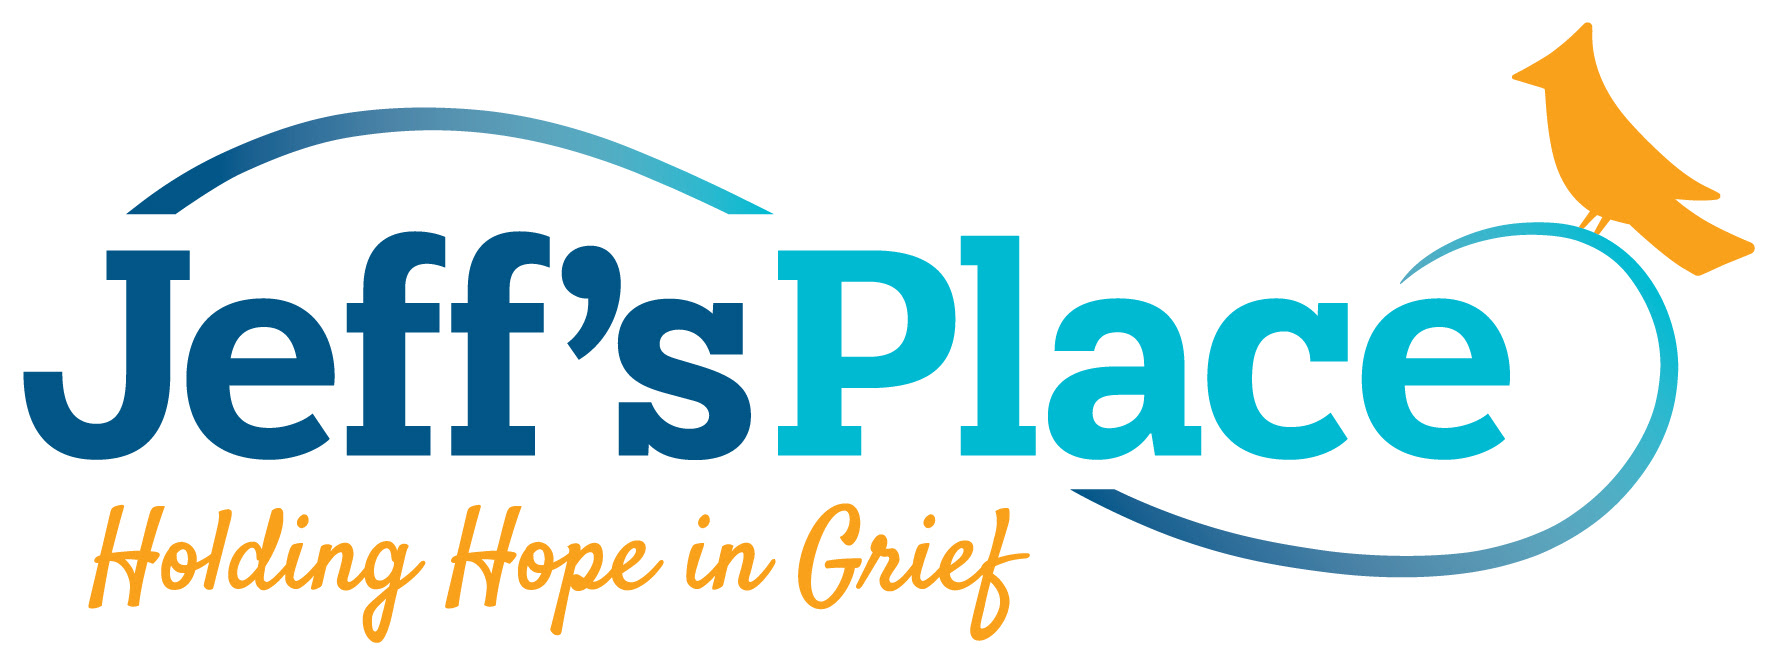 Jeff's Place logo